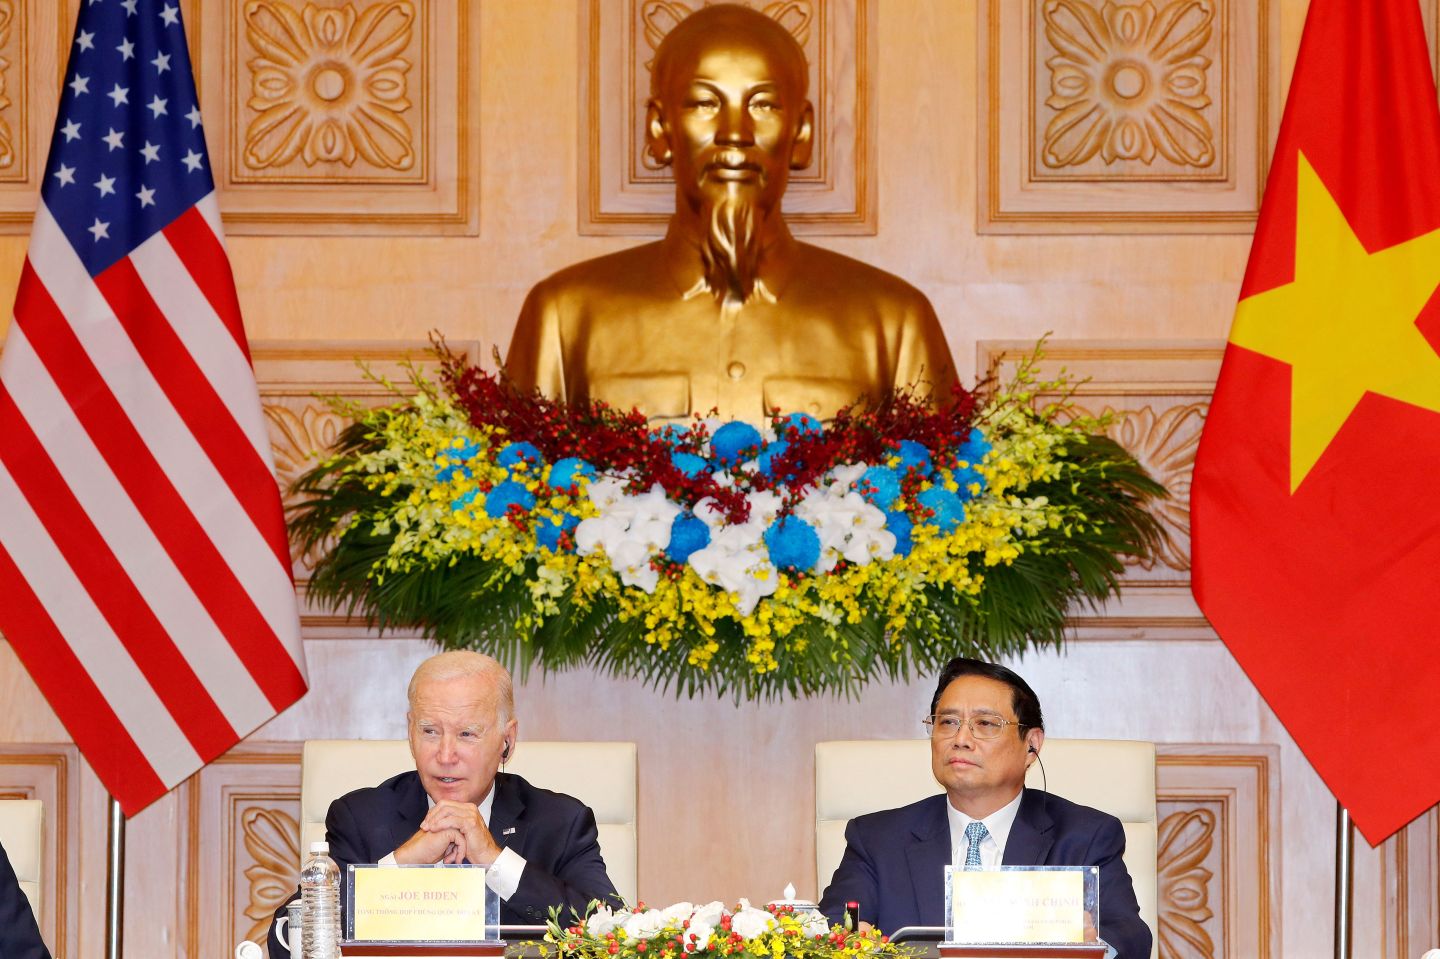 Xi visits Vietnam this week, following Biden’s trip in September